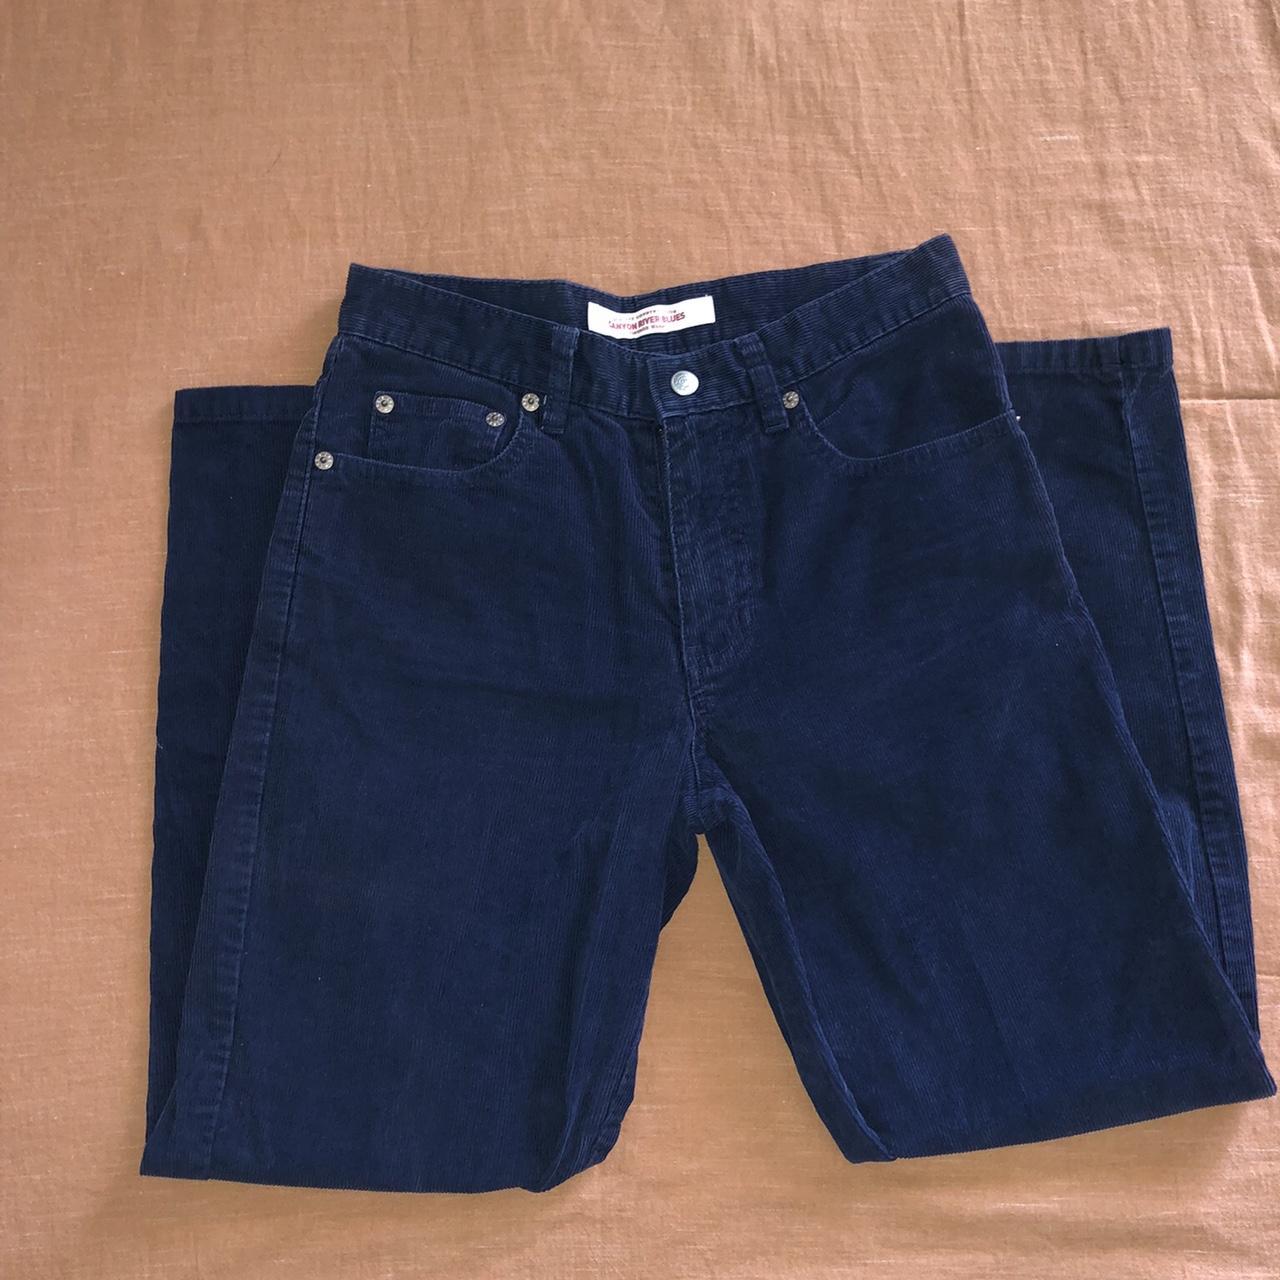 Product Image 1 - Vintage Navy blue corduroy pants